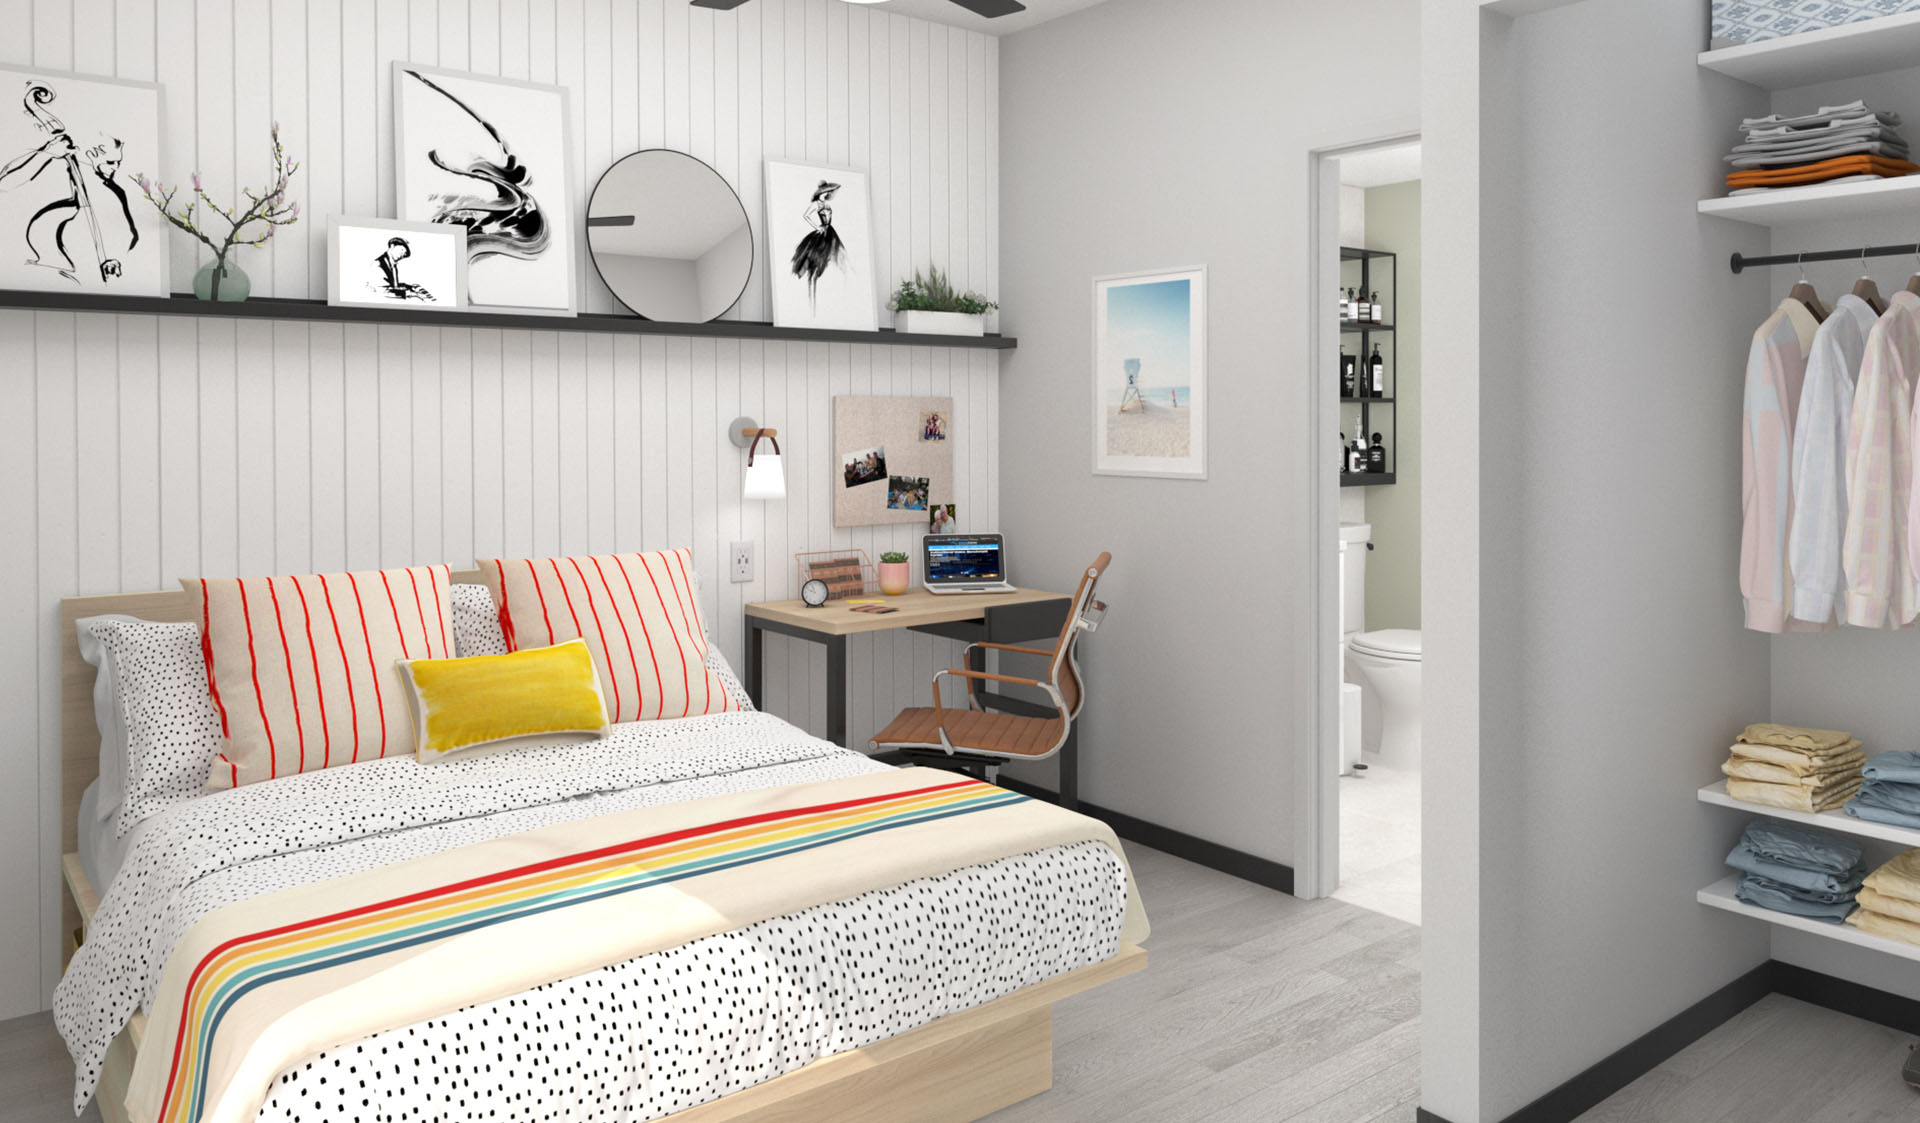 Rendering of student housing bedroom with custom furniture by Morgan Li